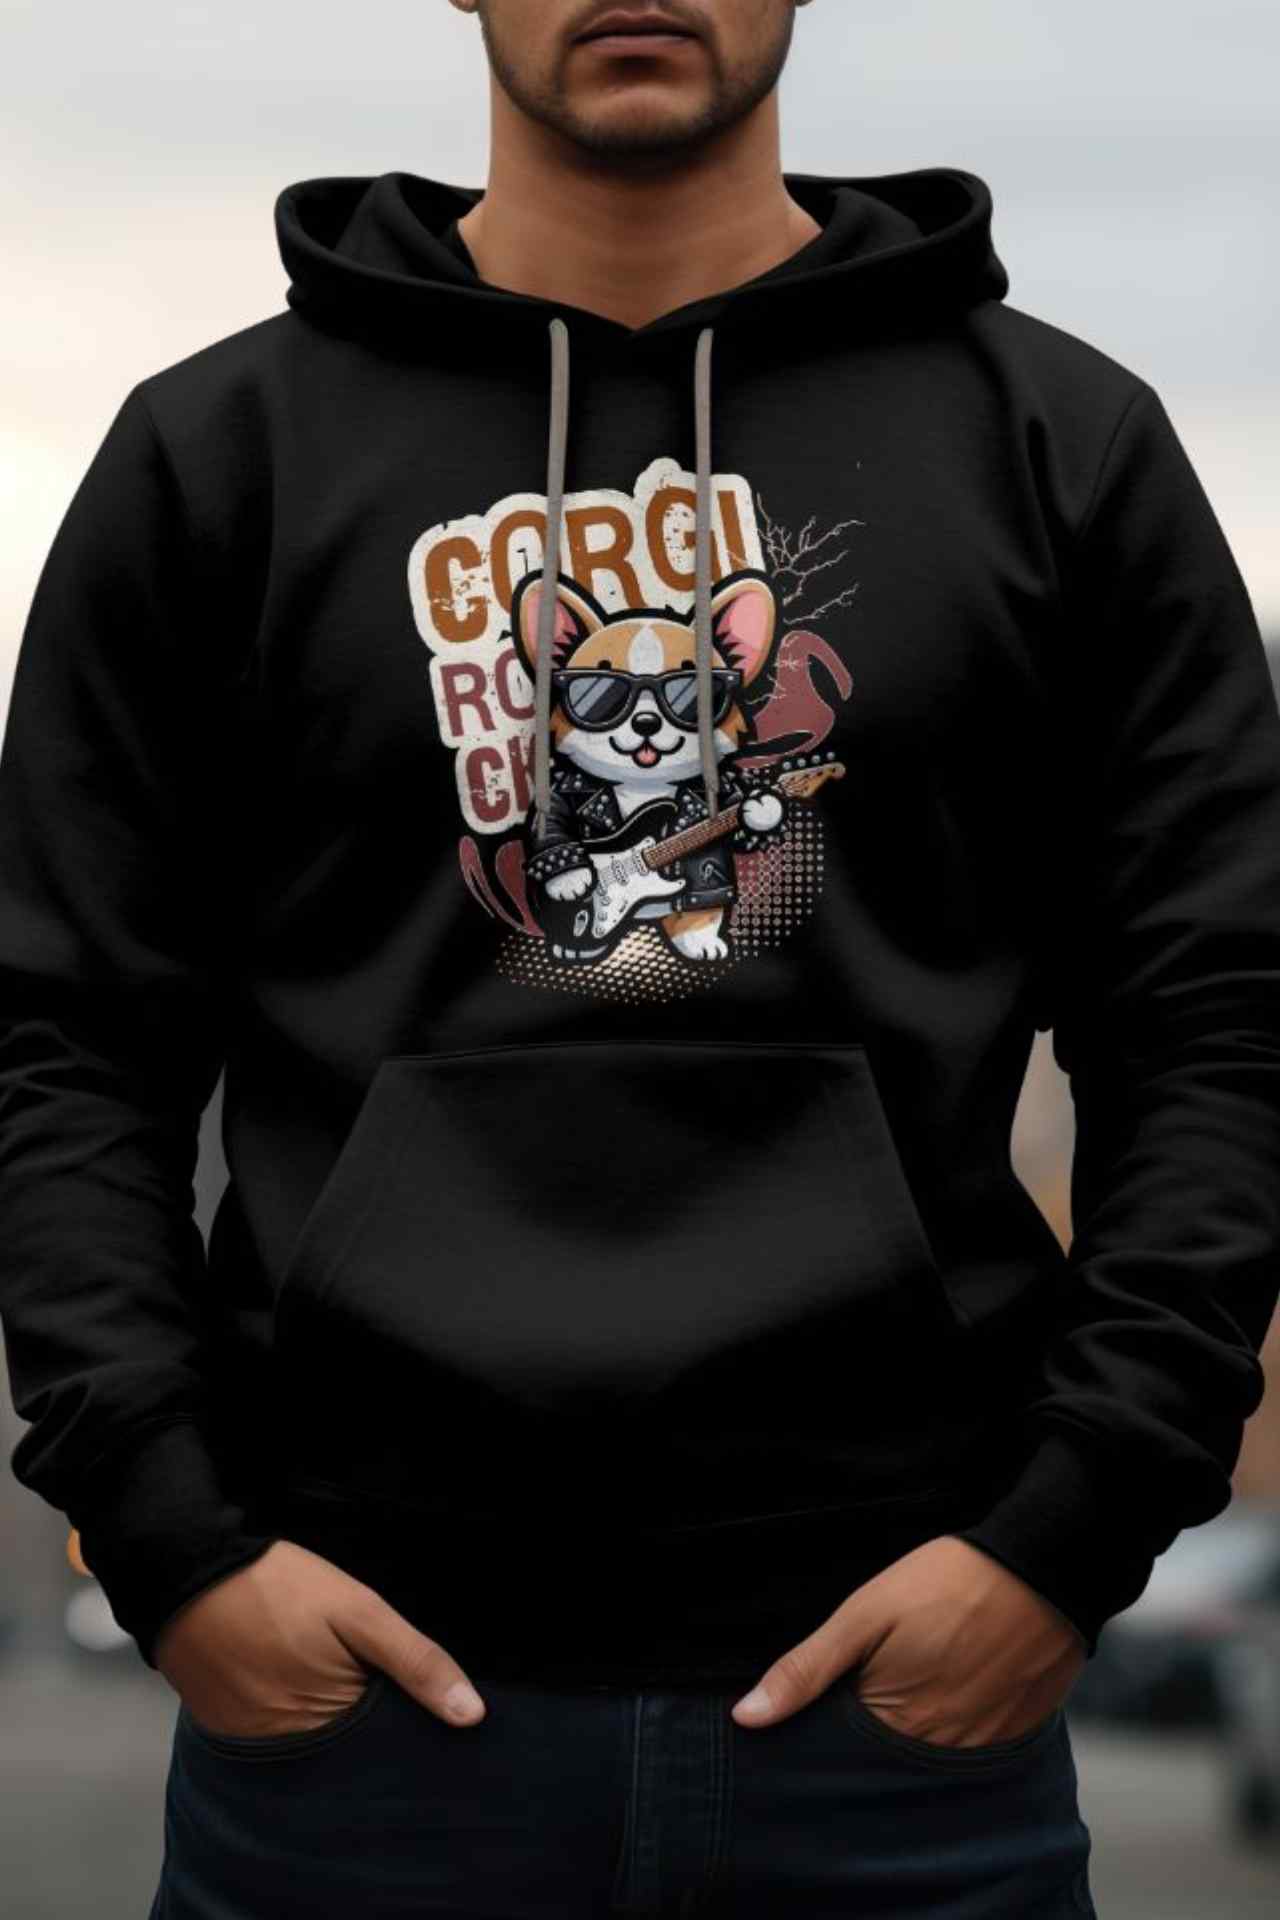 Cool corgi rocker rock and roll hoodie